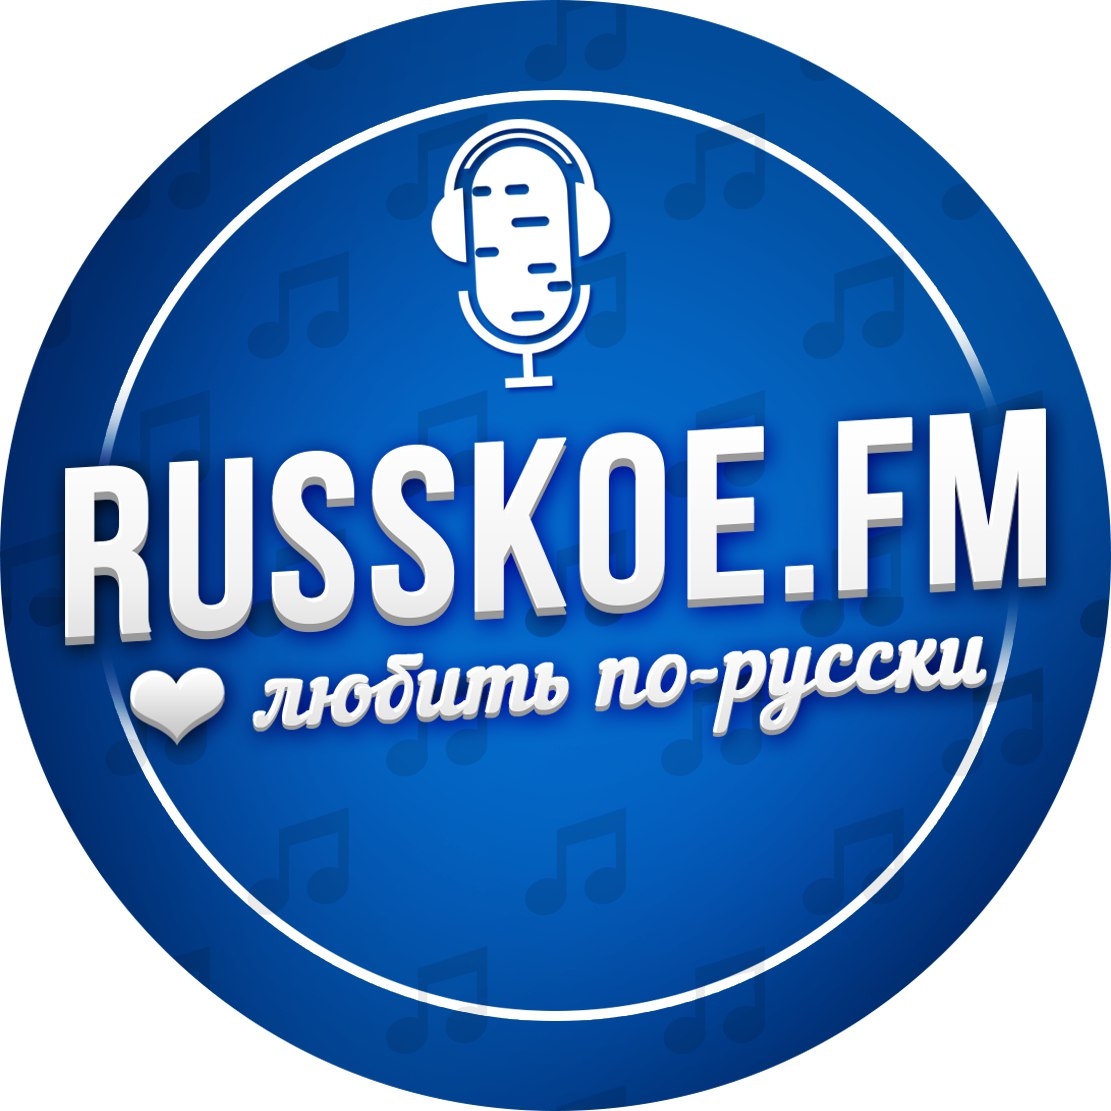 Russkoe. Русское fm. Русское радио fm. Русское fm логотип. Логотип радиостанции русское радио.